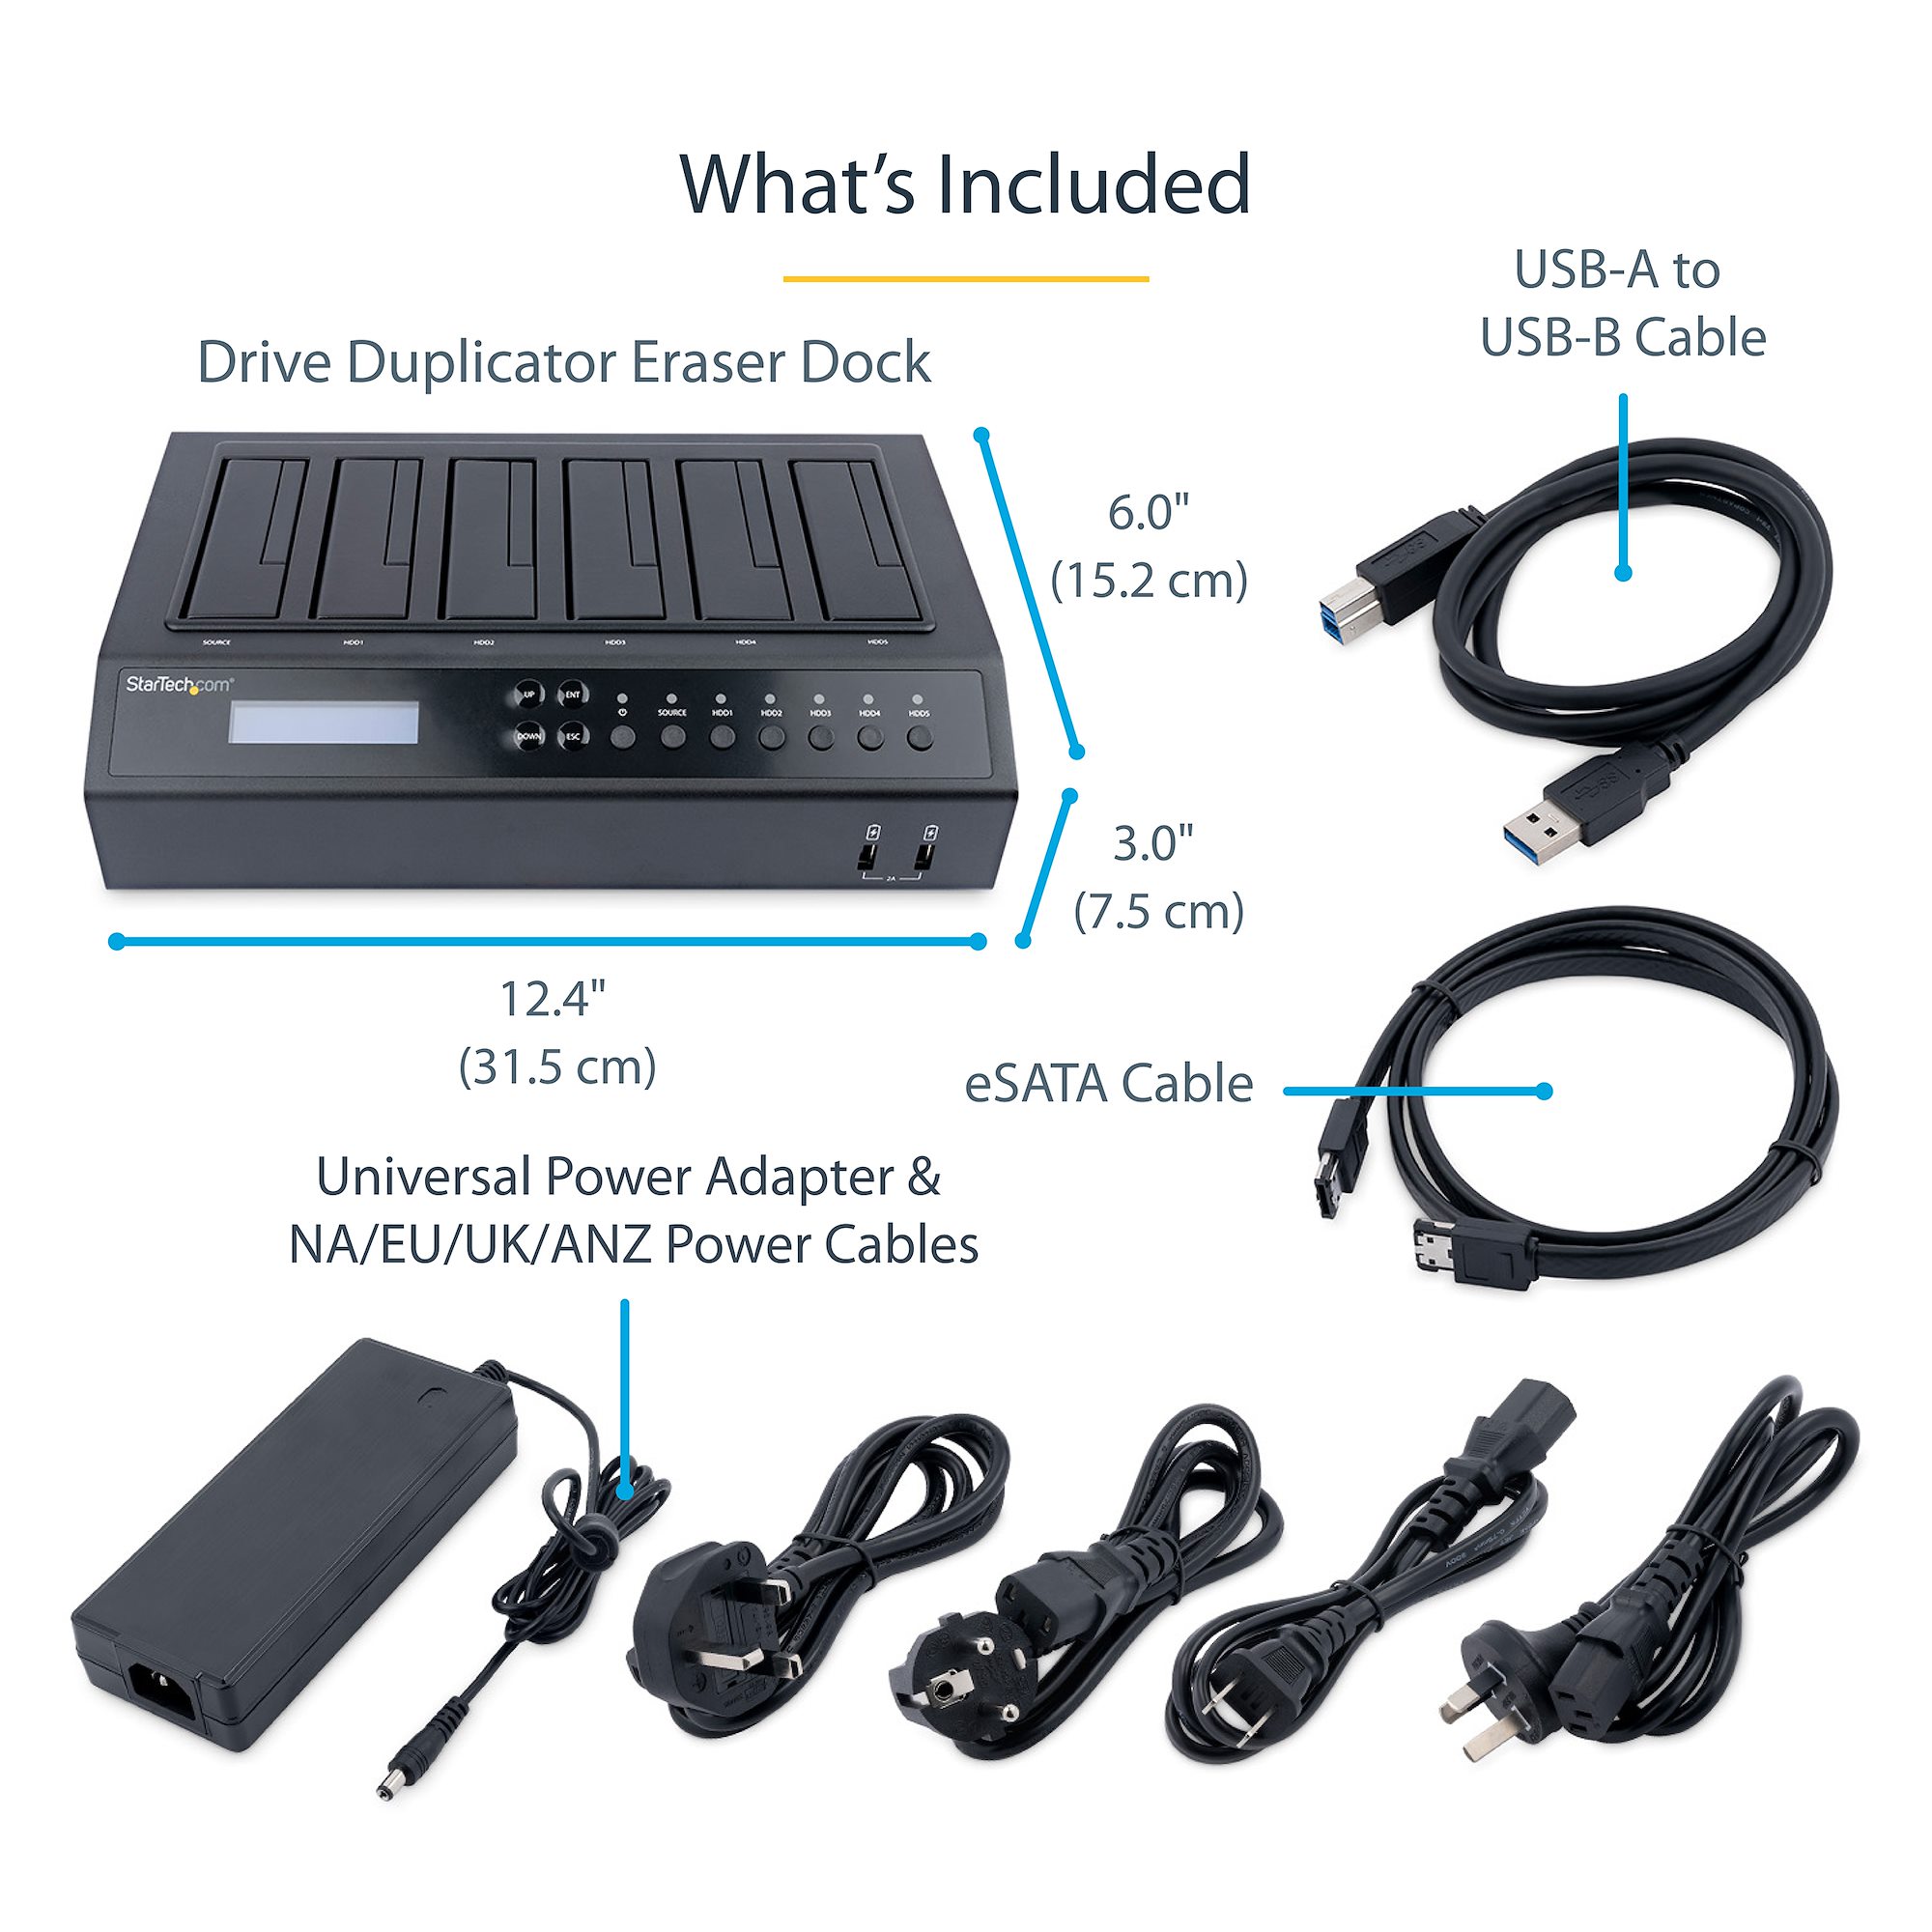 USB 3.0 / eSATA 1:5 HDD Duplicator Dock - HDD Duplicators - Hard